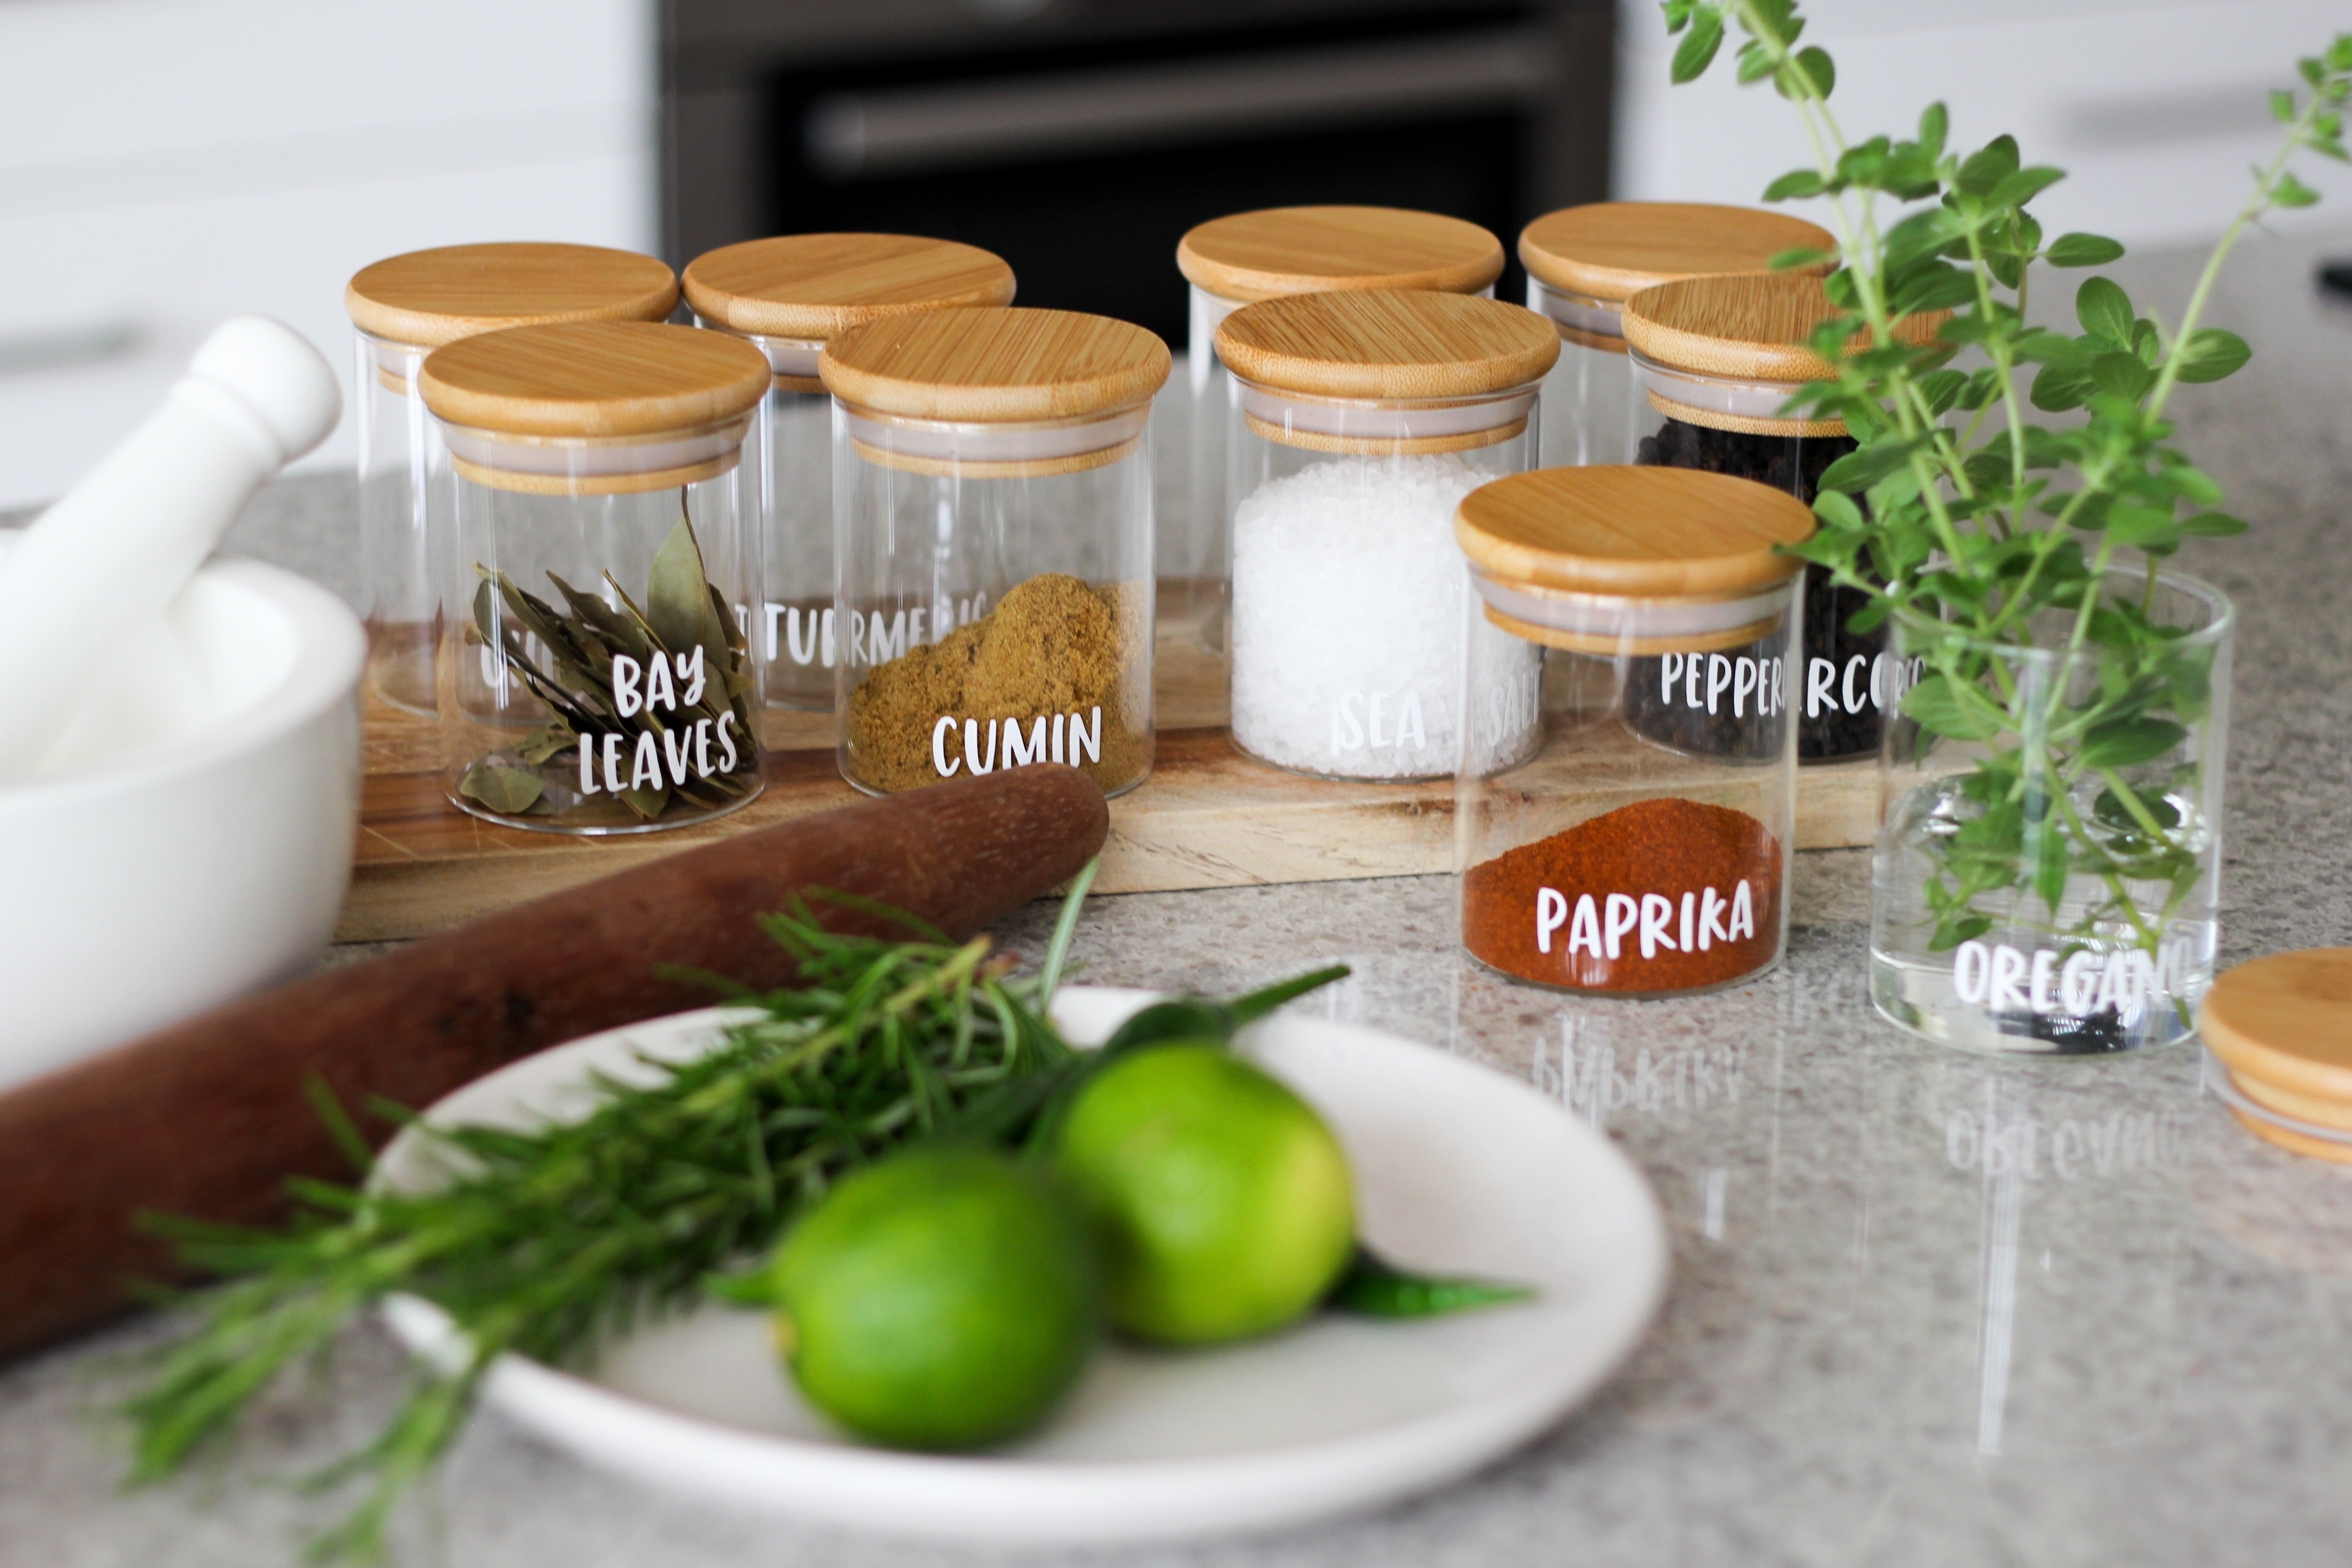 Bamboo Glass Spice Jar Starter Pack - Premium, Blissful Little Home